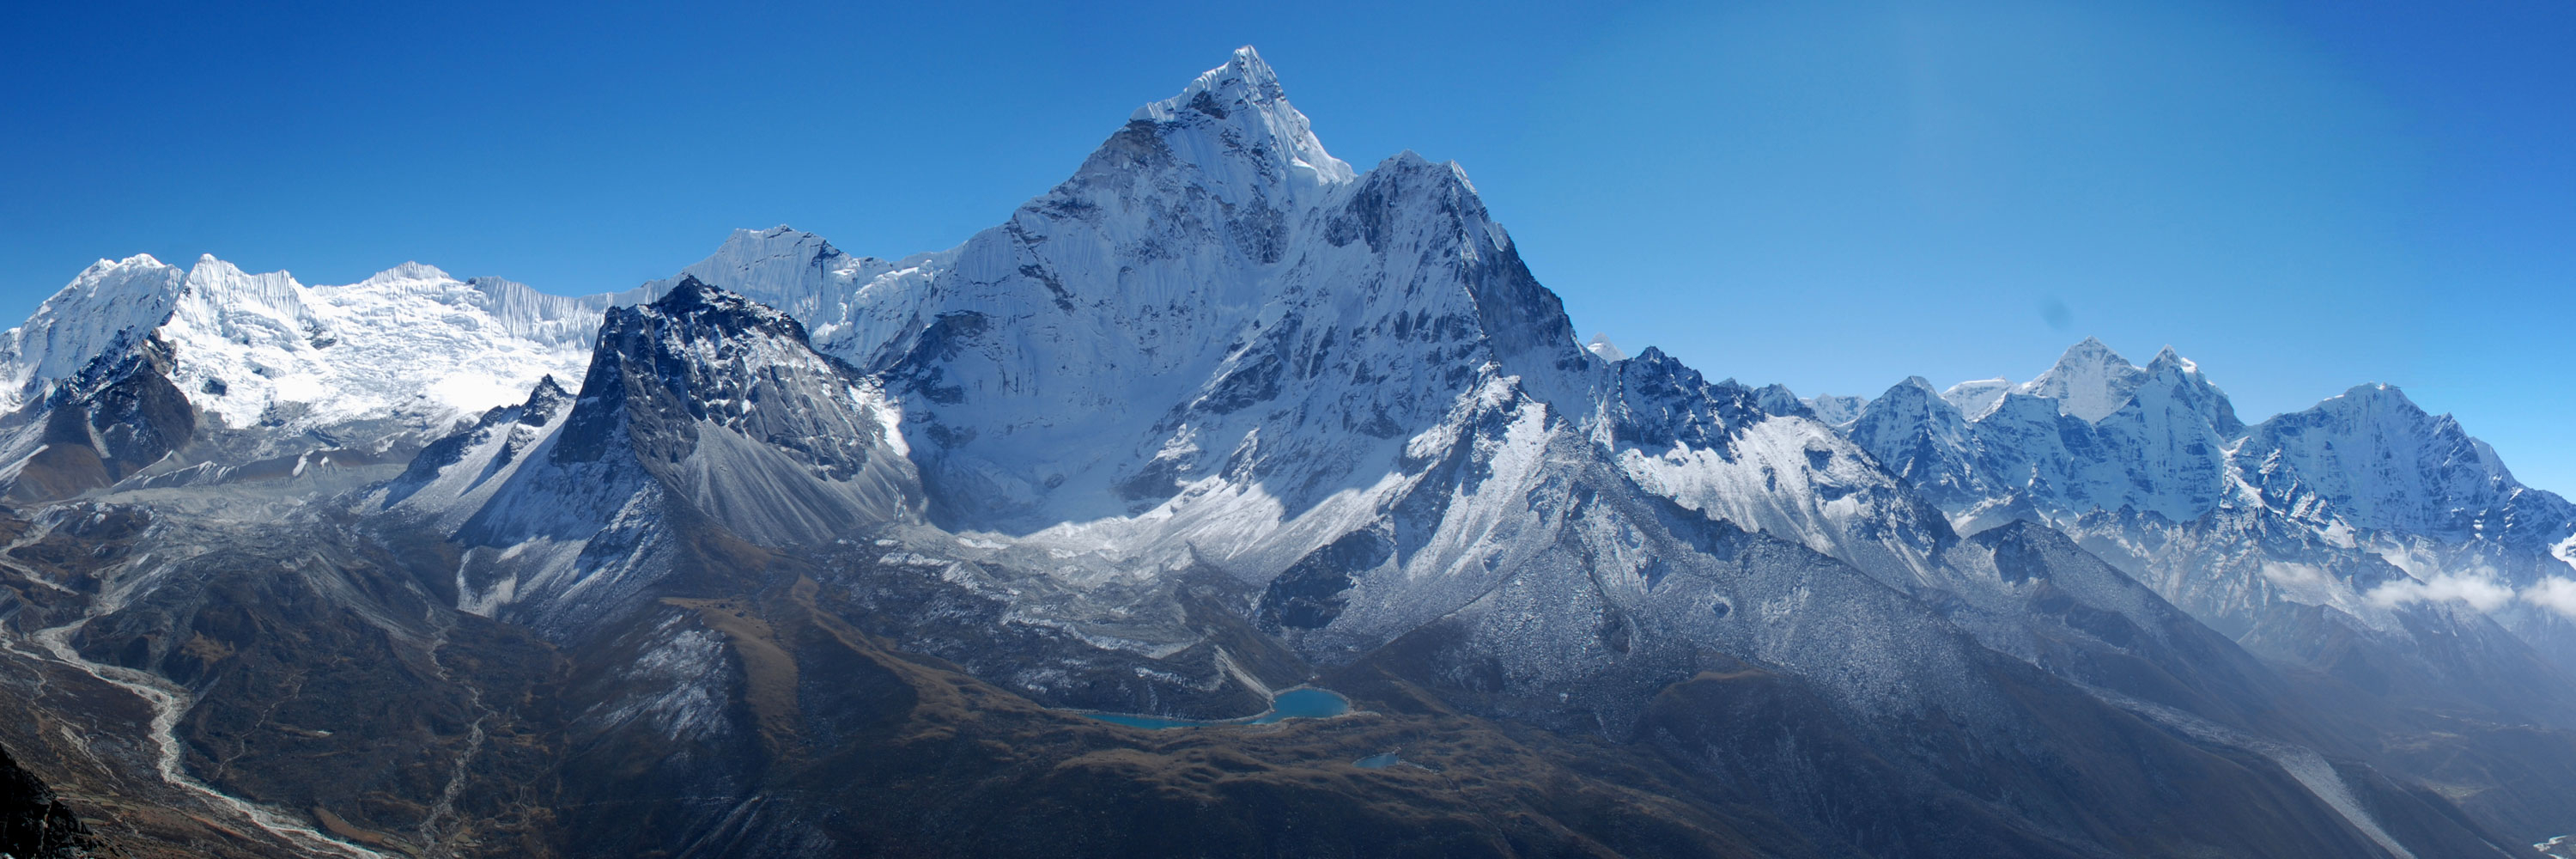 Images of Himalayas | 3000x1000